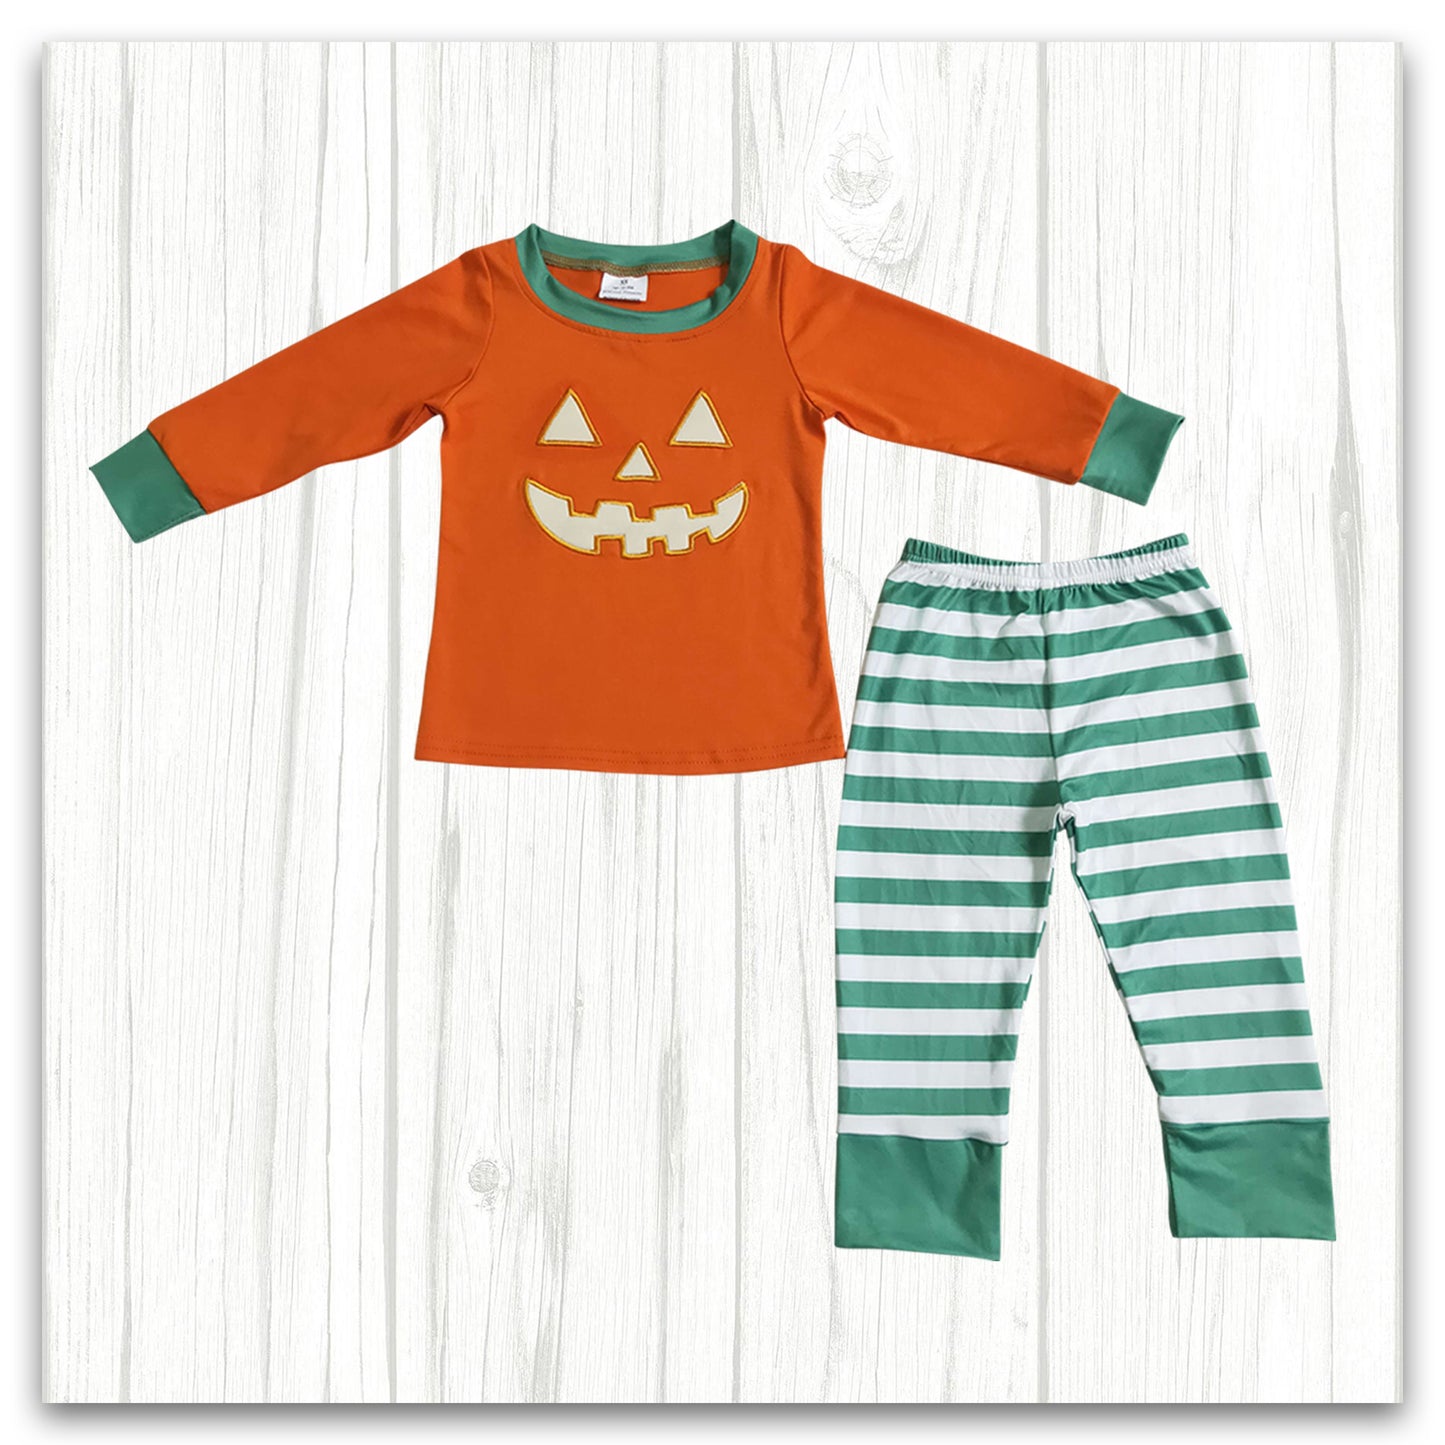 pumpkin face embroidery pajamas boy's clothing